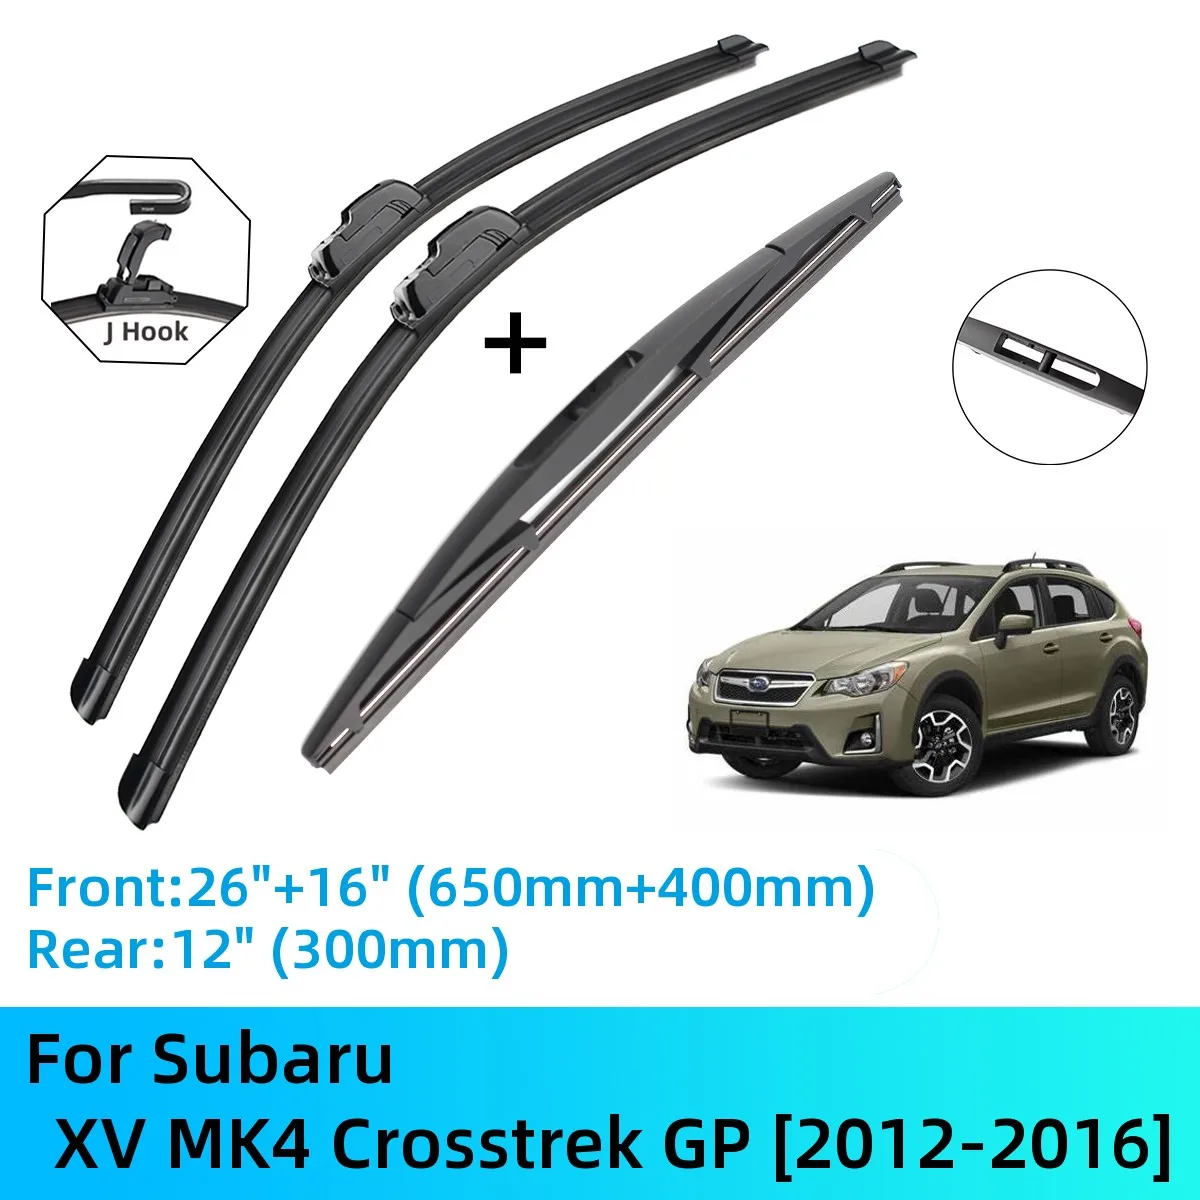 

For Subaru XV MK4 Crosstrek GP Front Rear Wiper Blades Brushes Cutter Accessories J U Hook 2012-2016 2012 2013 2014 2015 2016